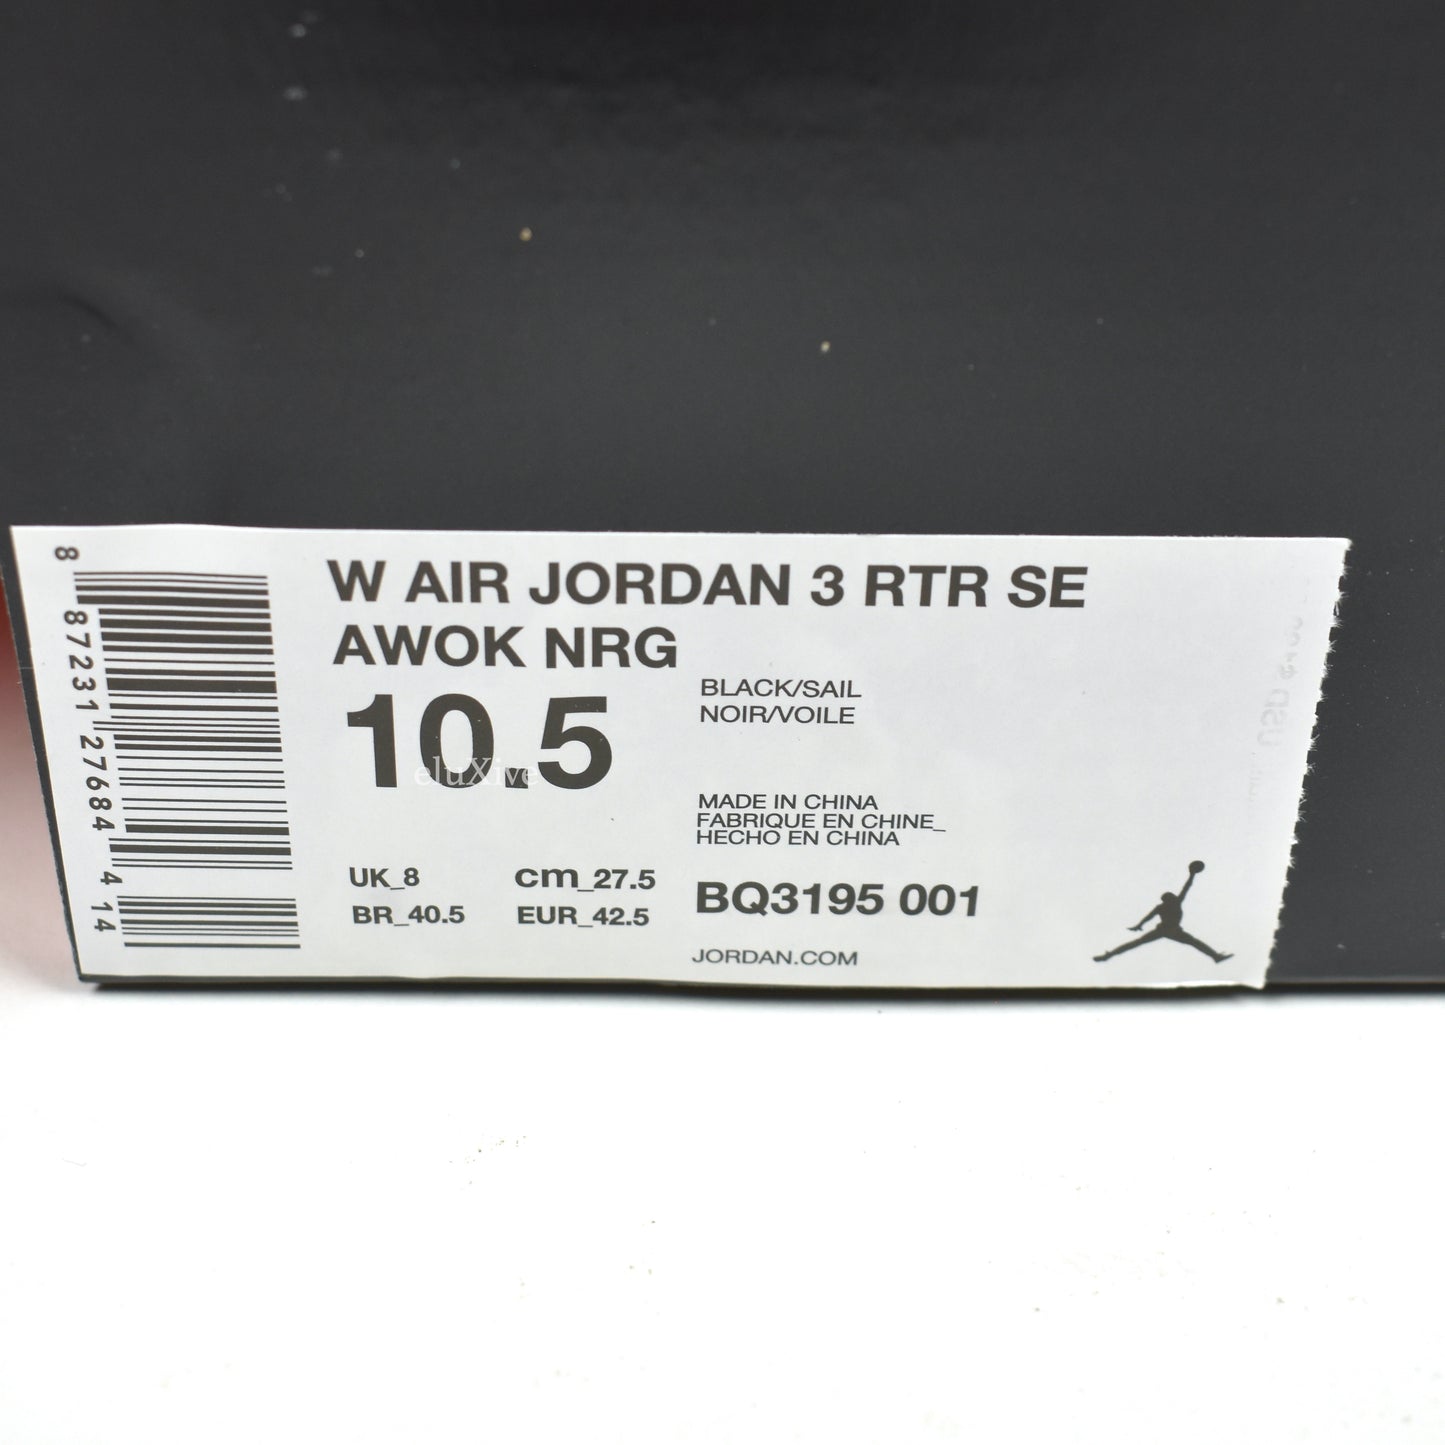 Nike x Vogue - Air Jordan 3 RTR SE AWOK NRG (Black)